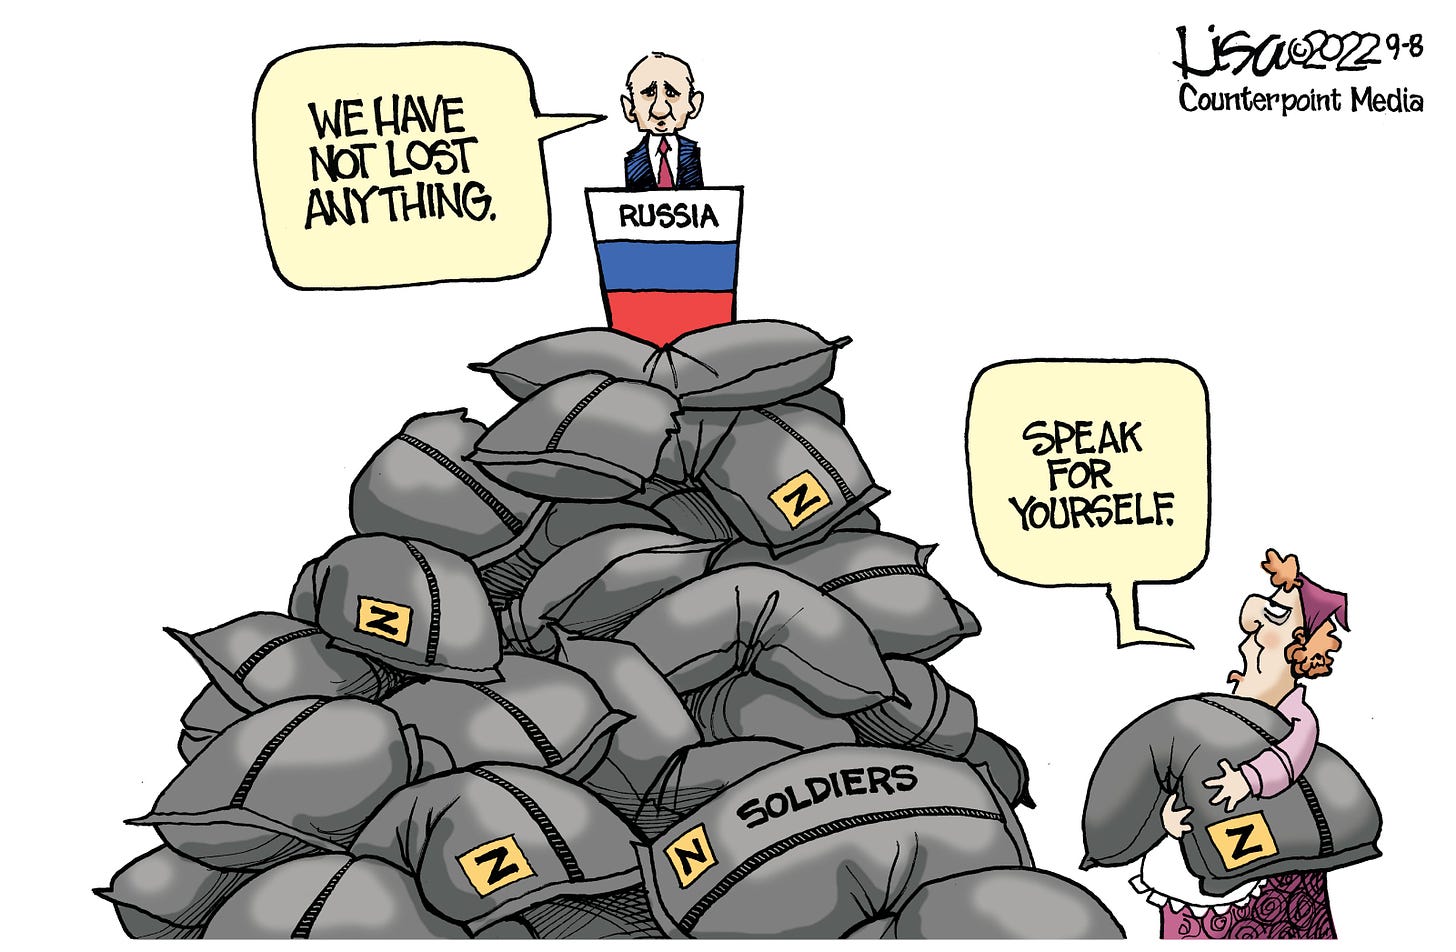 Putin: "We have lost nothing". : r/europe